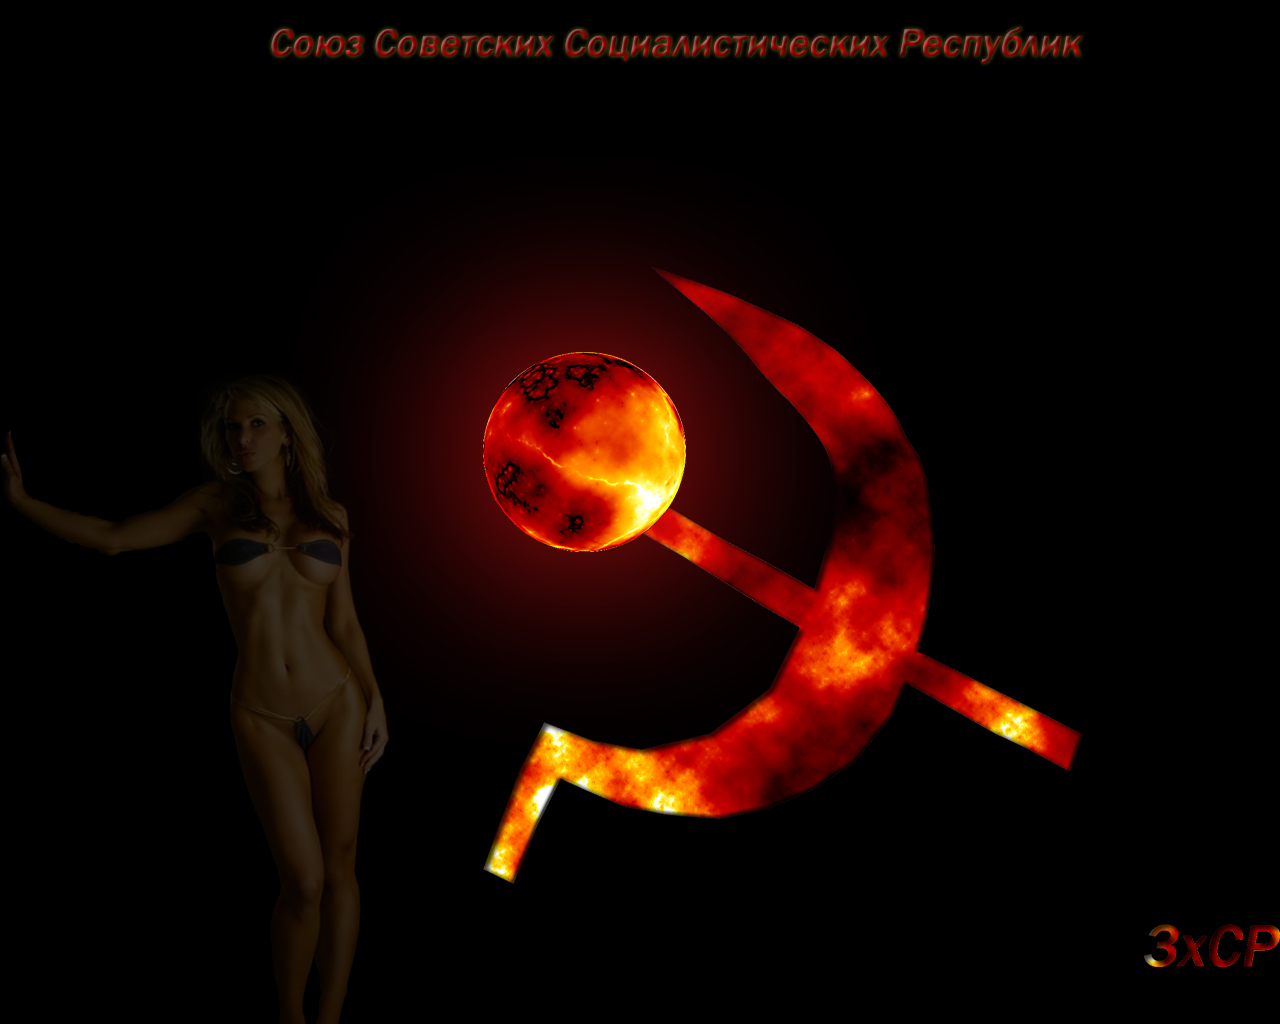 Puter Wallpaper The Union Of Soviet Socialist Republics Ussr